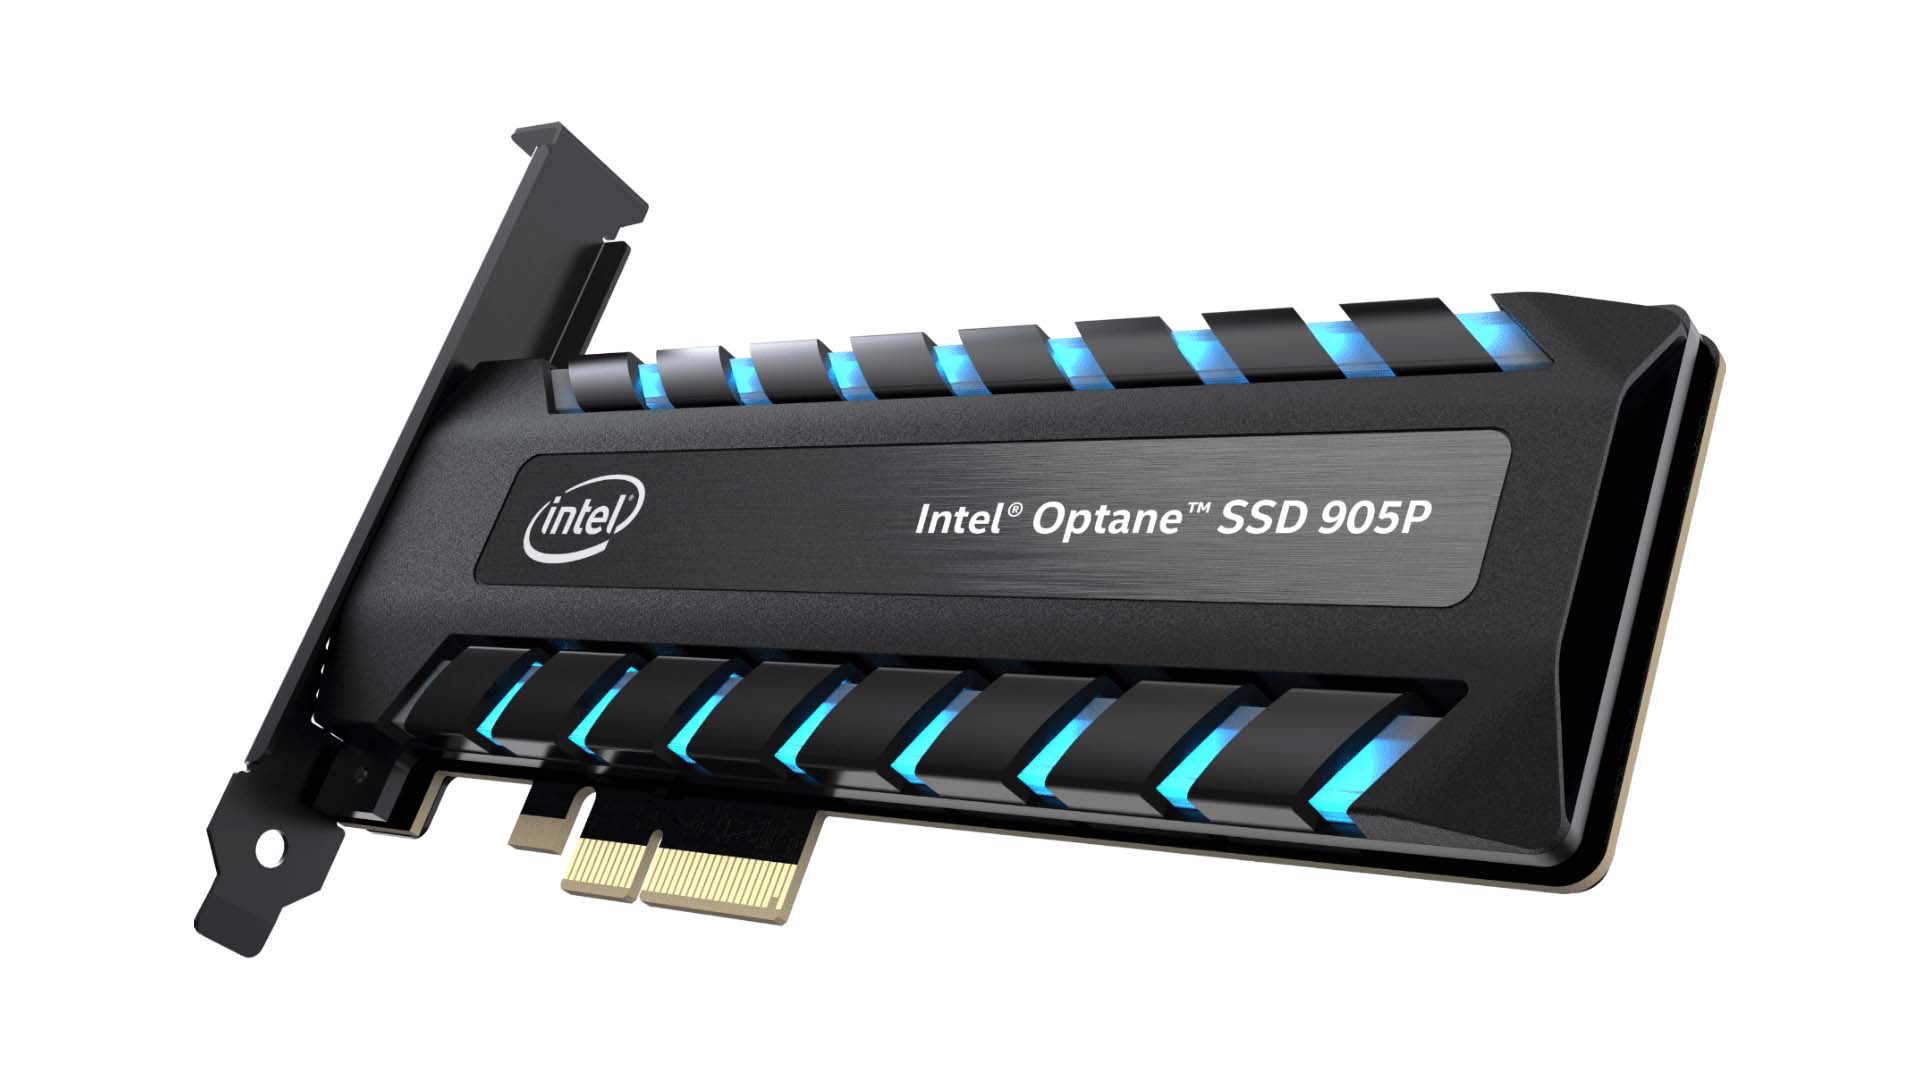 M.2 版Intel Optane SSD 905P 380GB 即將推出- BenchLife.info